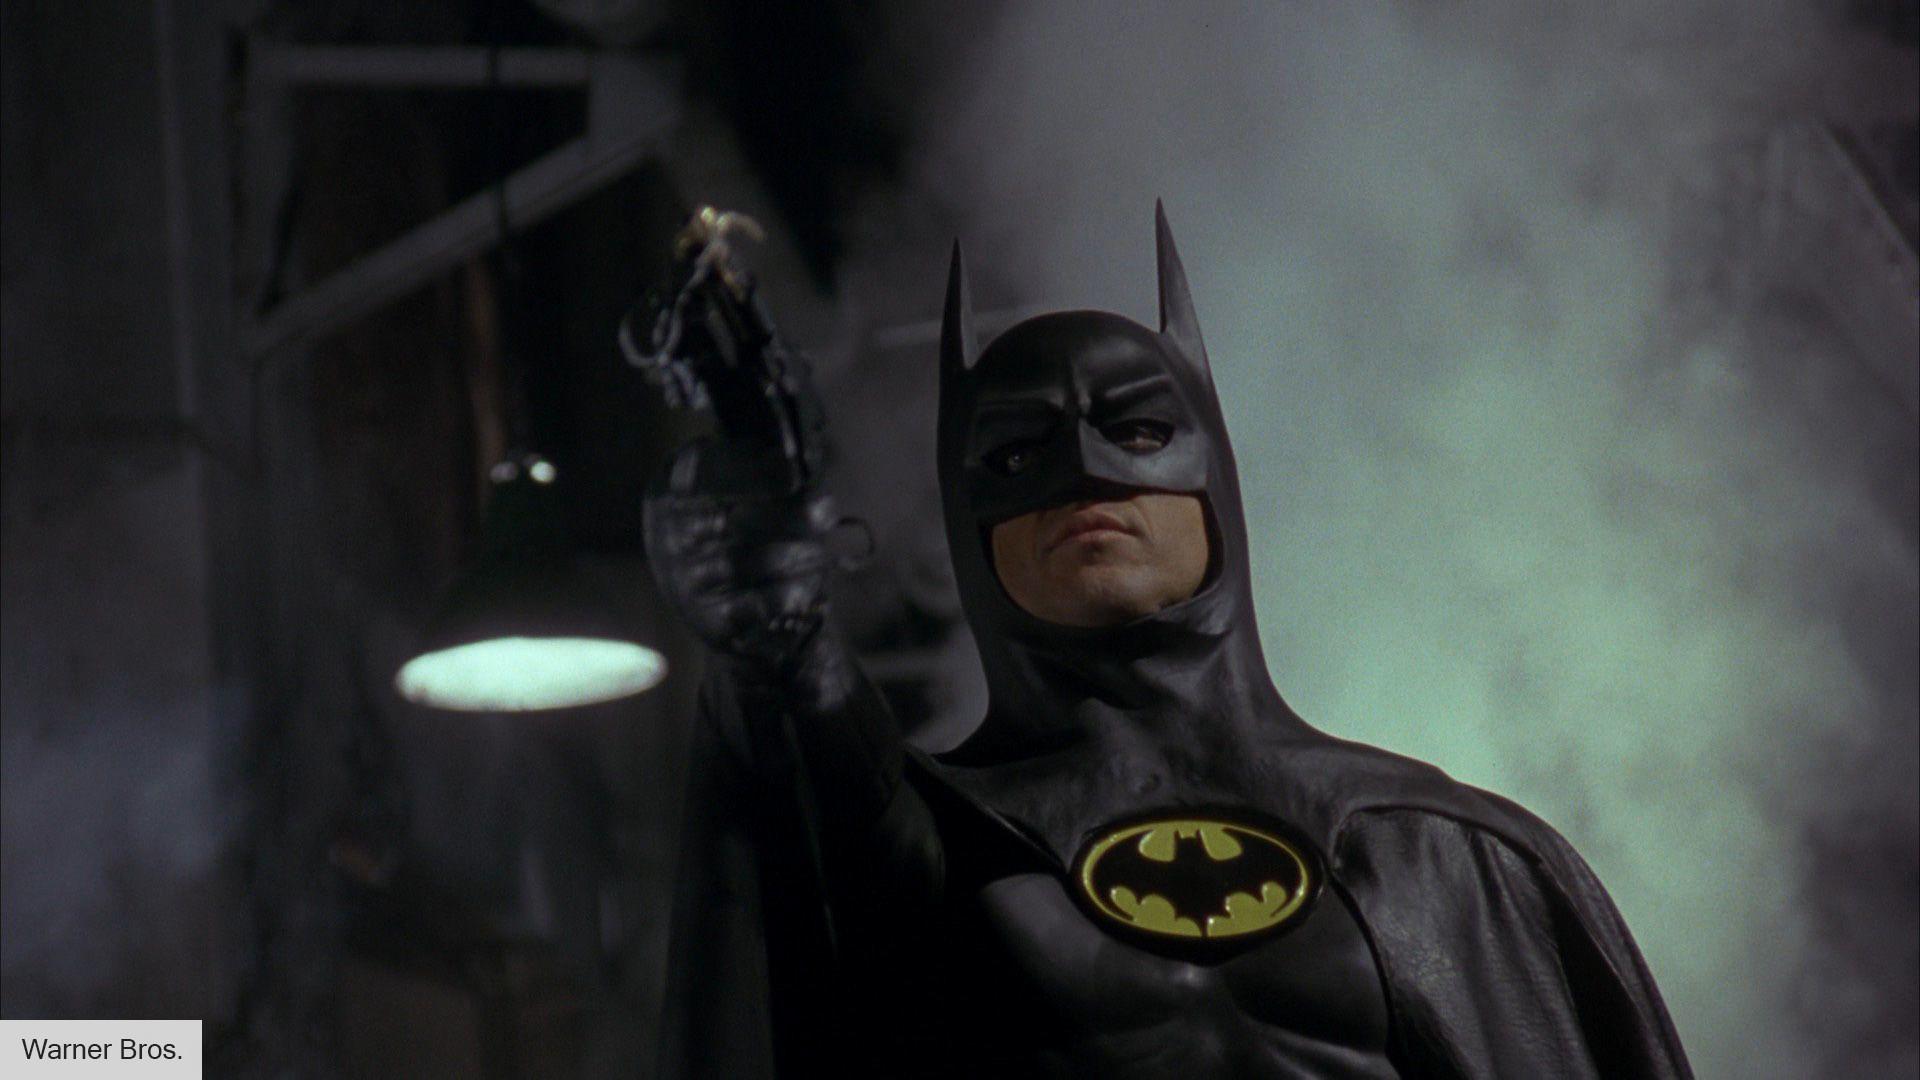 Batman 1989 grappling hook coming from NECA in October | The Digital Fix